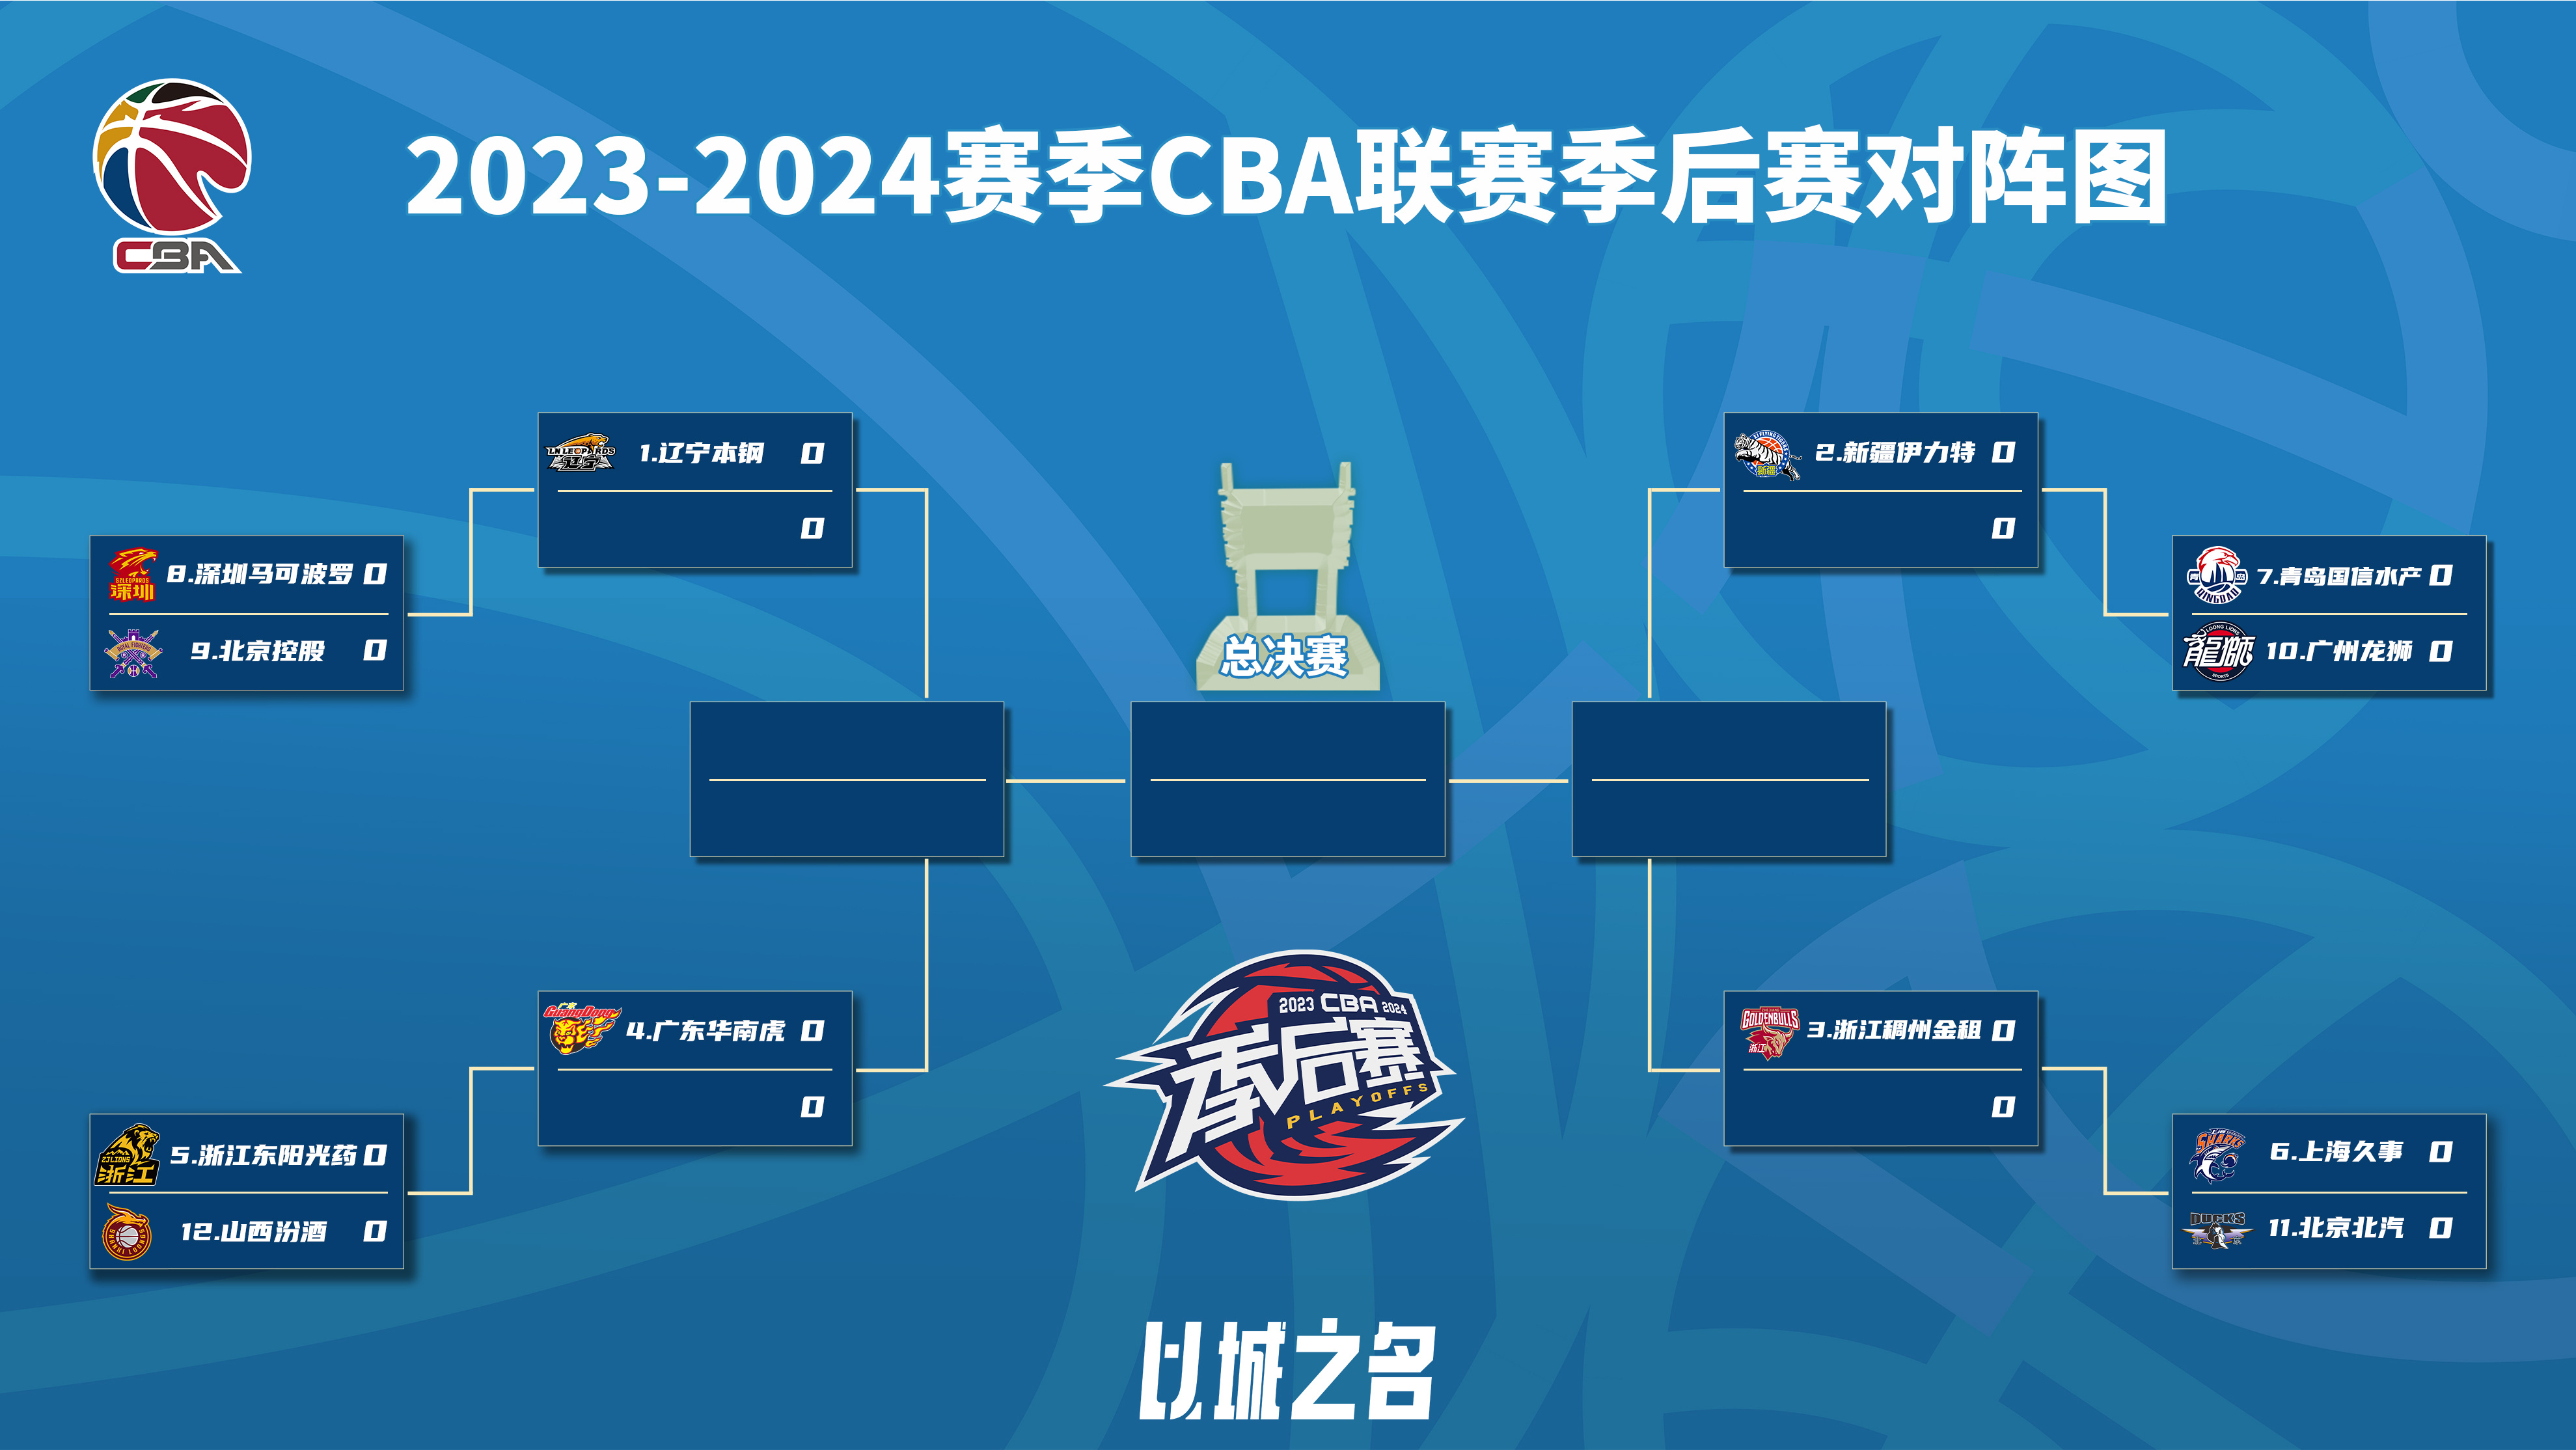 The 2023-2024 CBA playoffs matchups. /CBA via Weibo